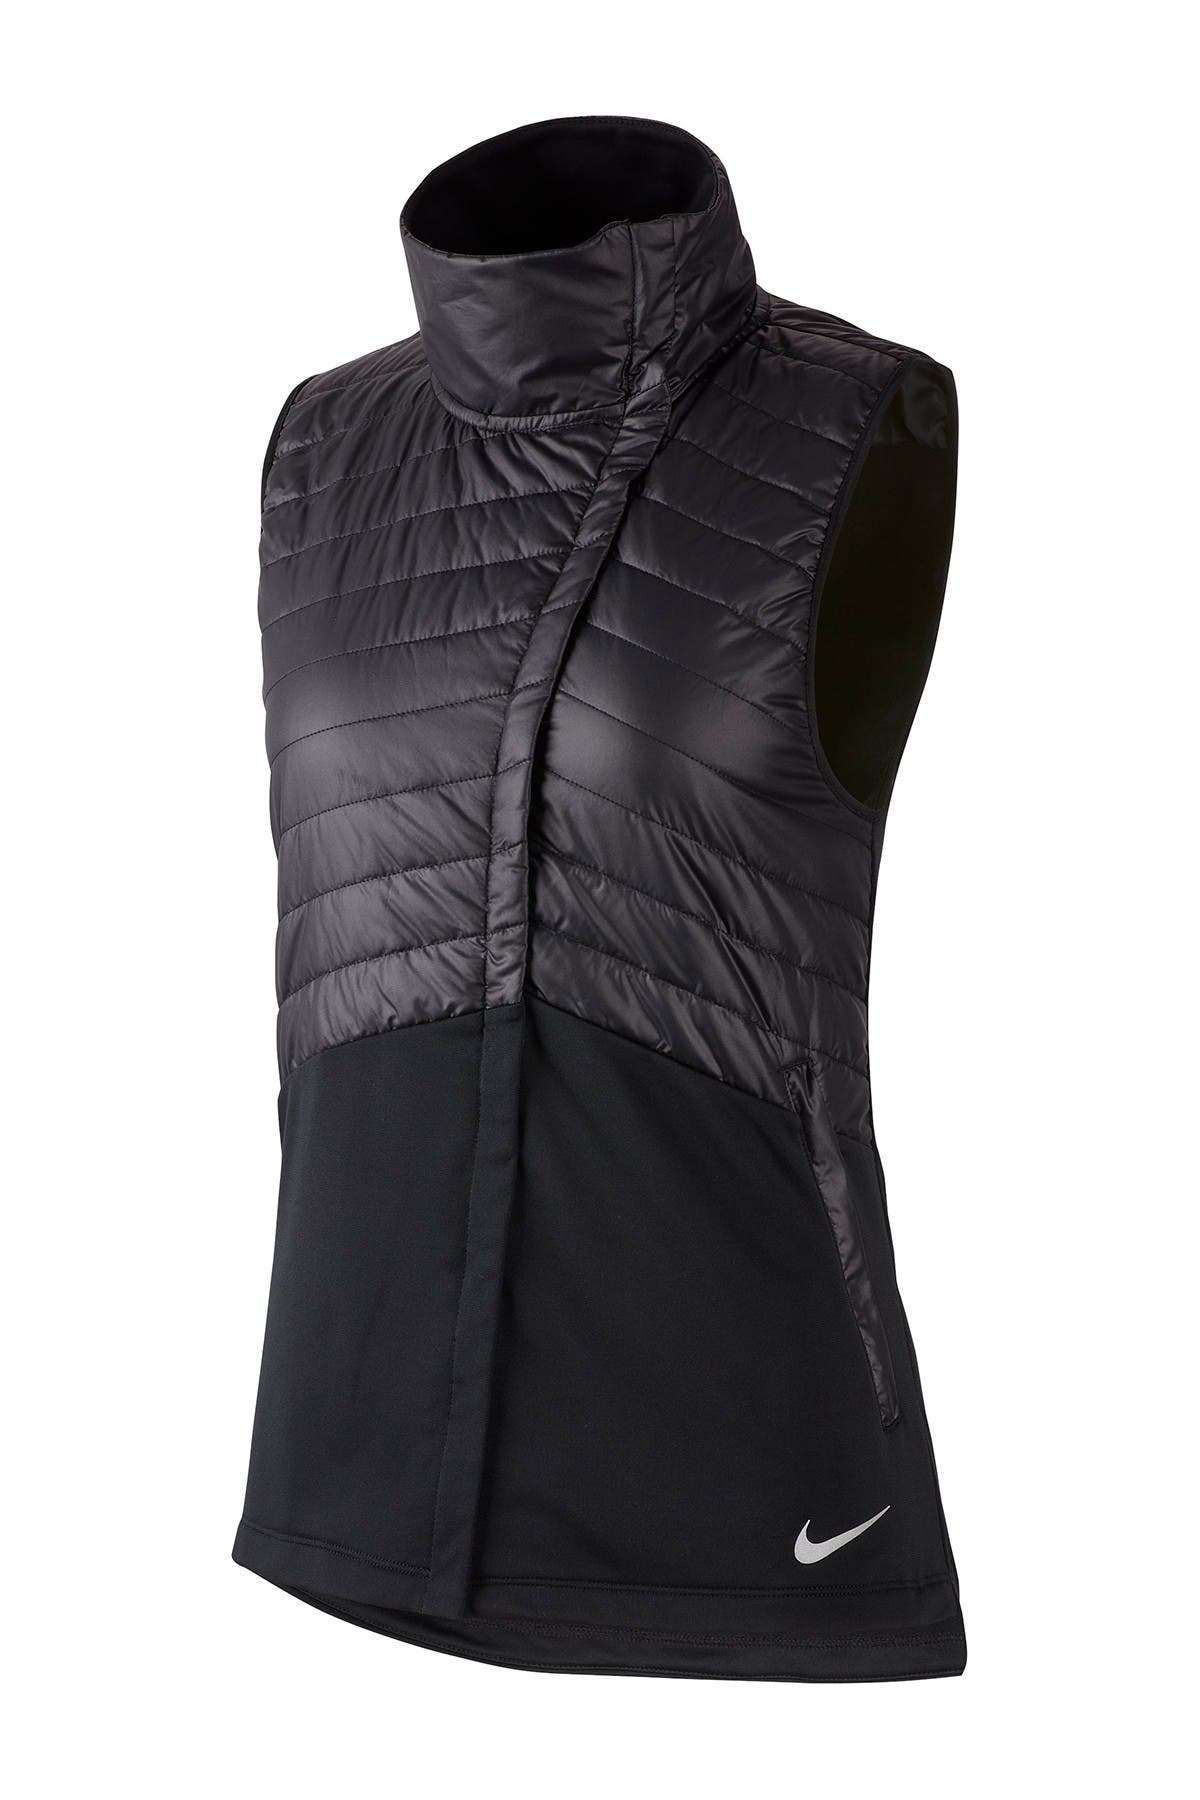 nike women's essential running vest